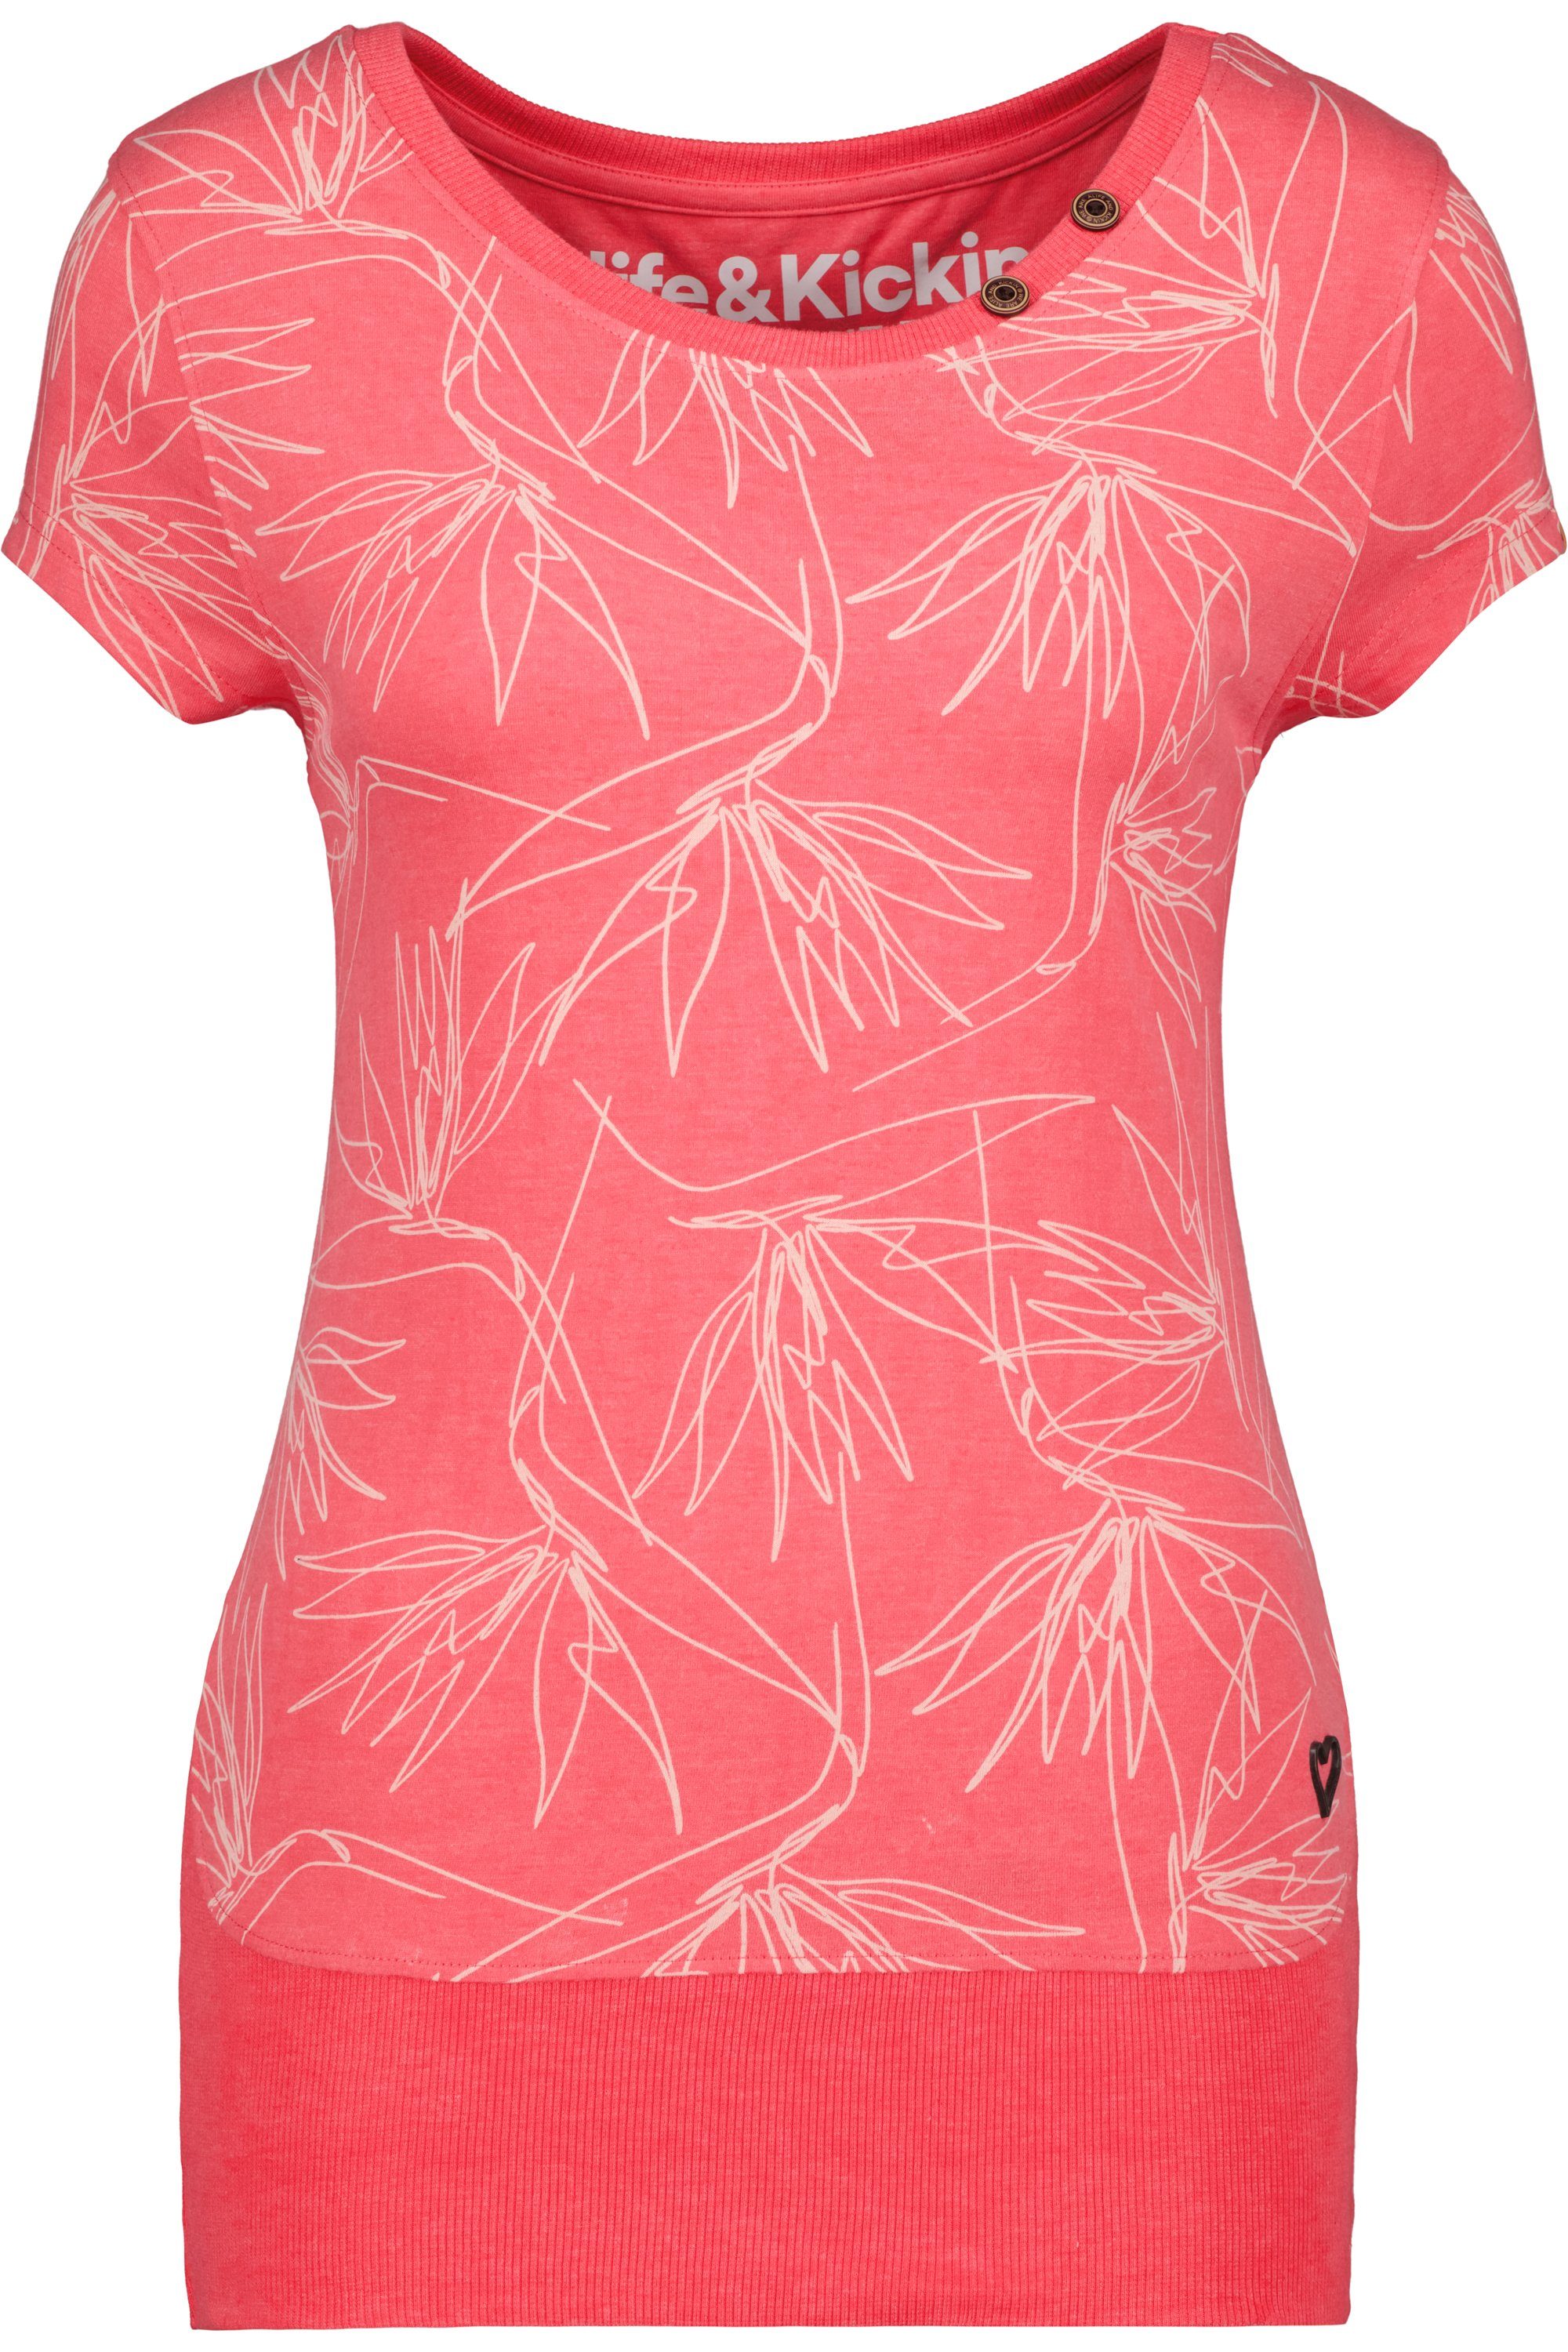 Damen Kurzarmshirt, Alife coral Rundhalsshirt B CocoAK Kickin & Shirt melange Shirt